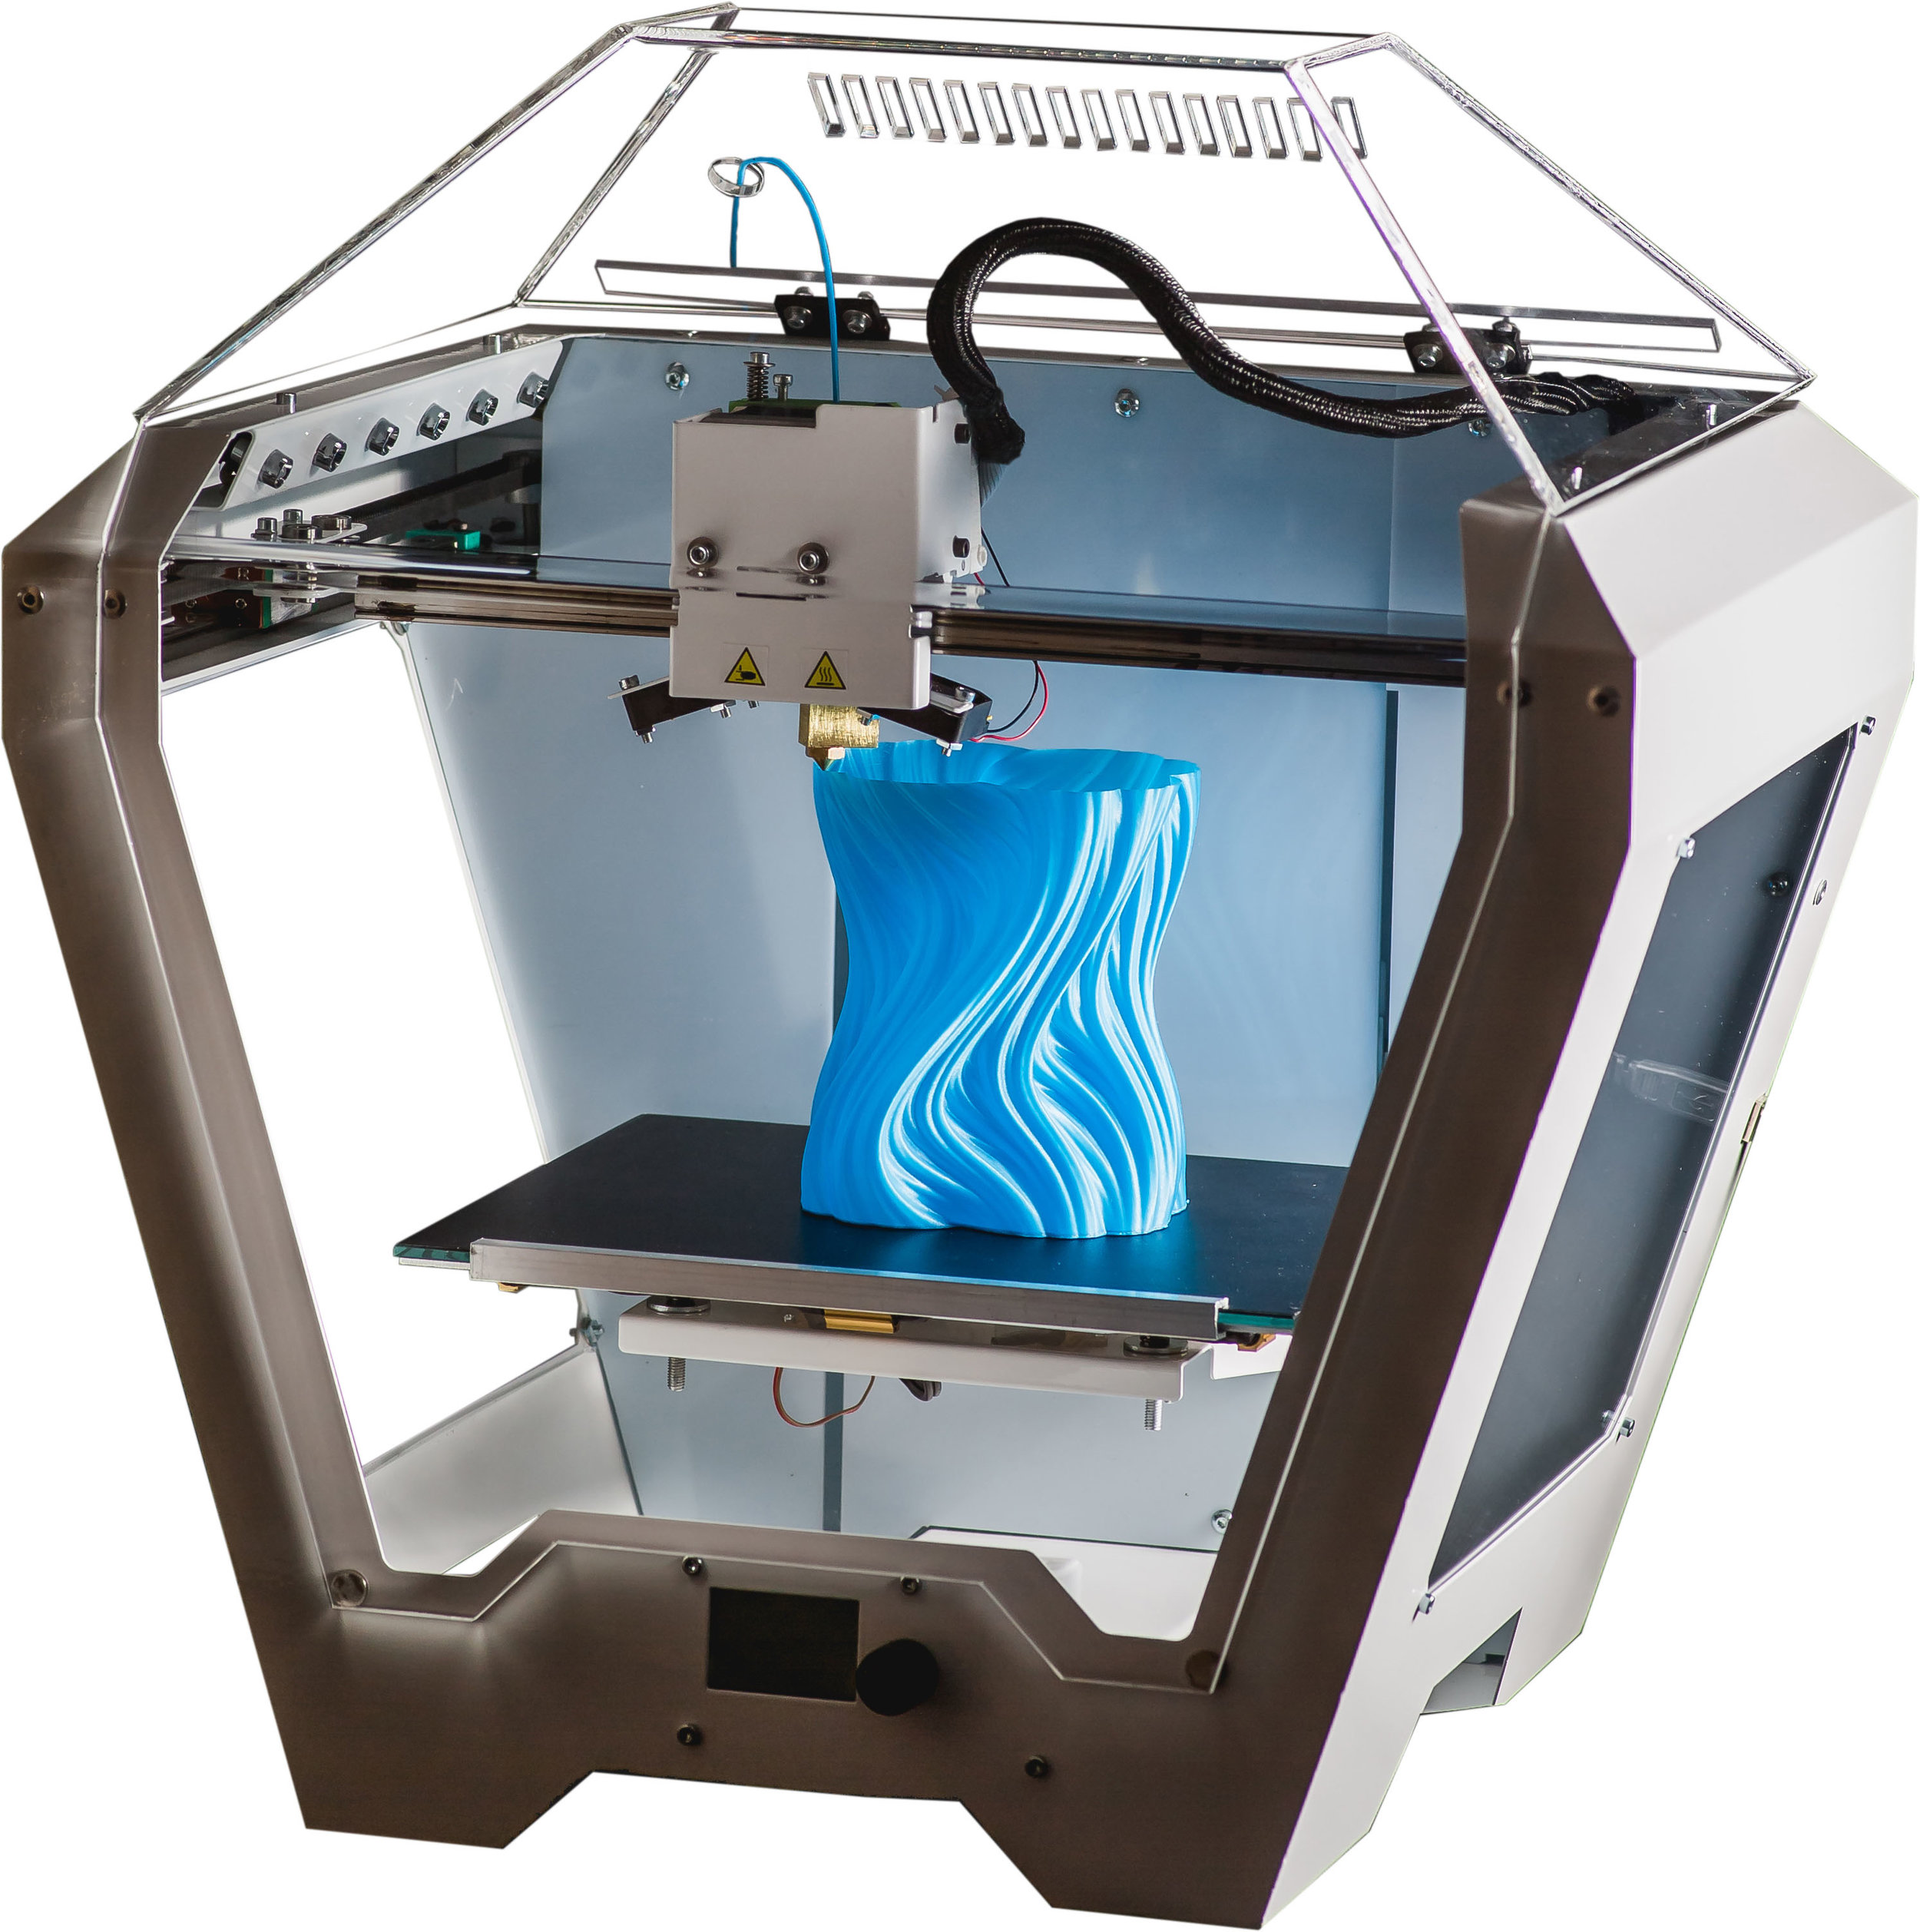  The new GEMform desktop 3D printer 